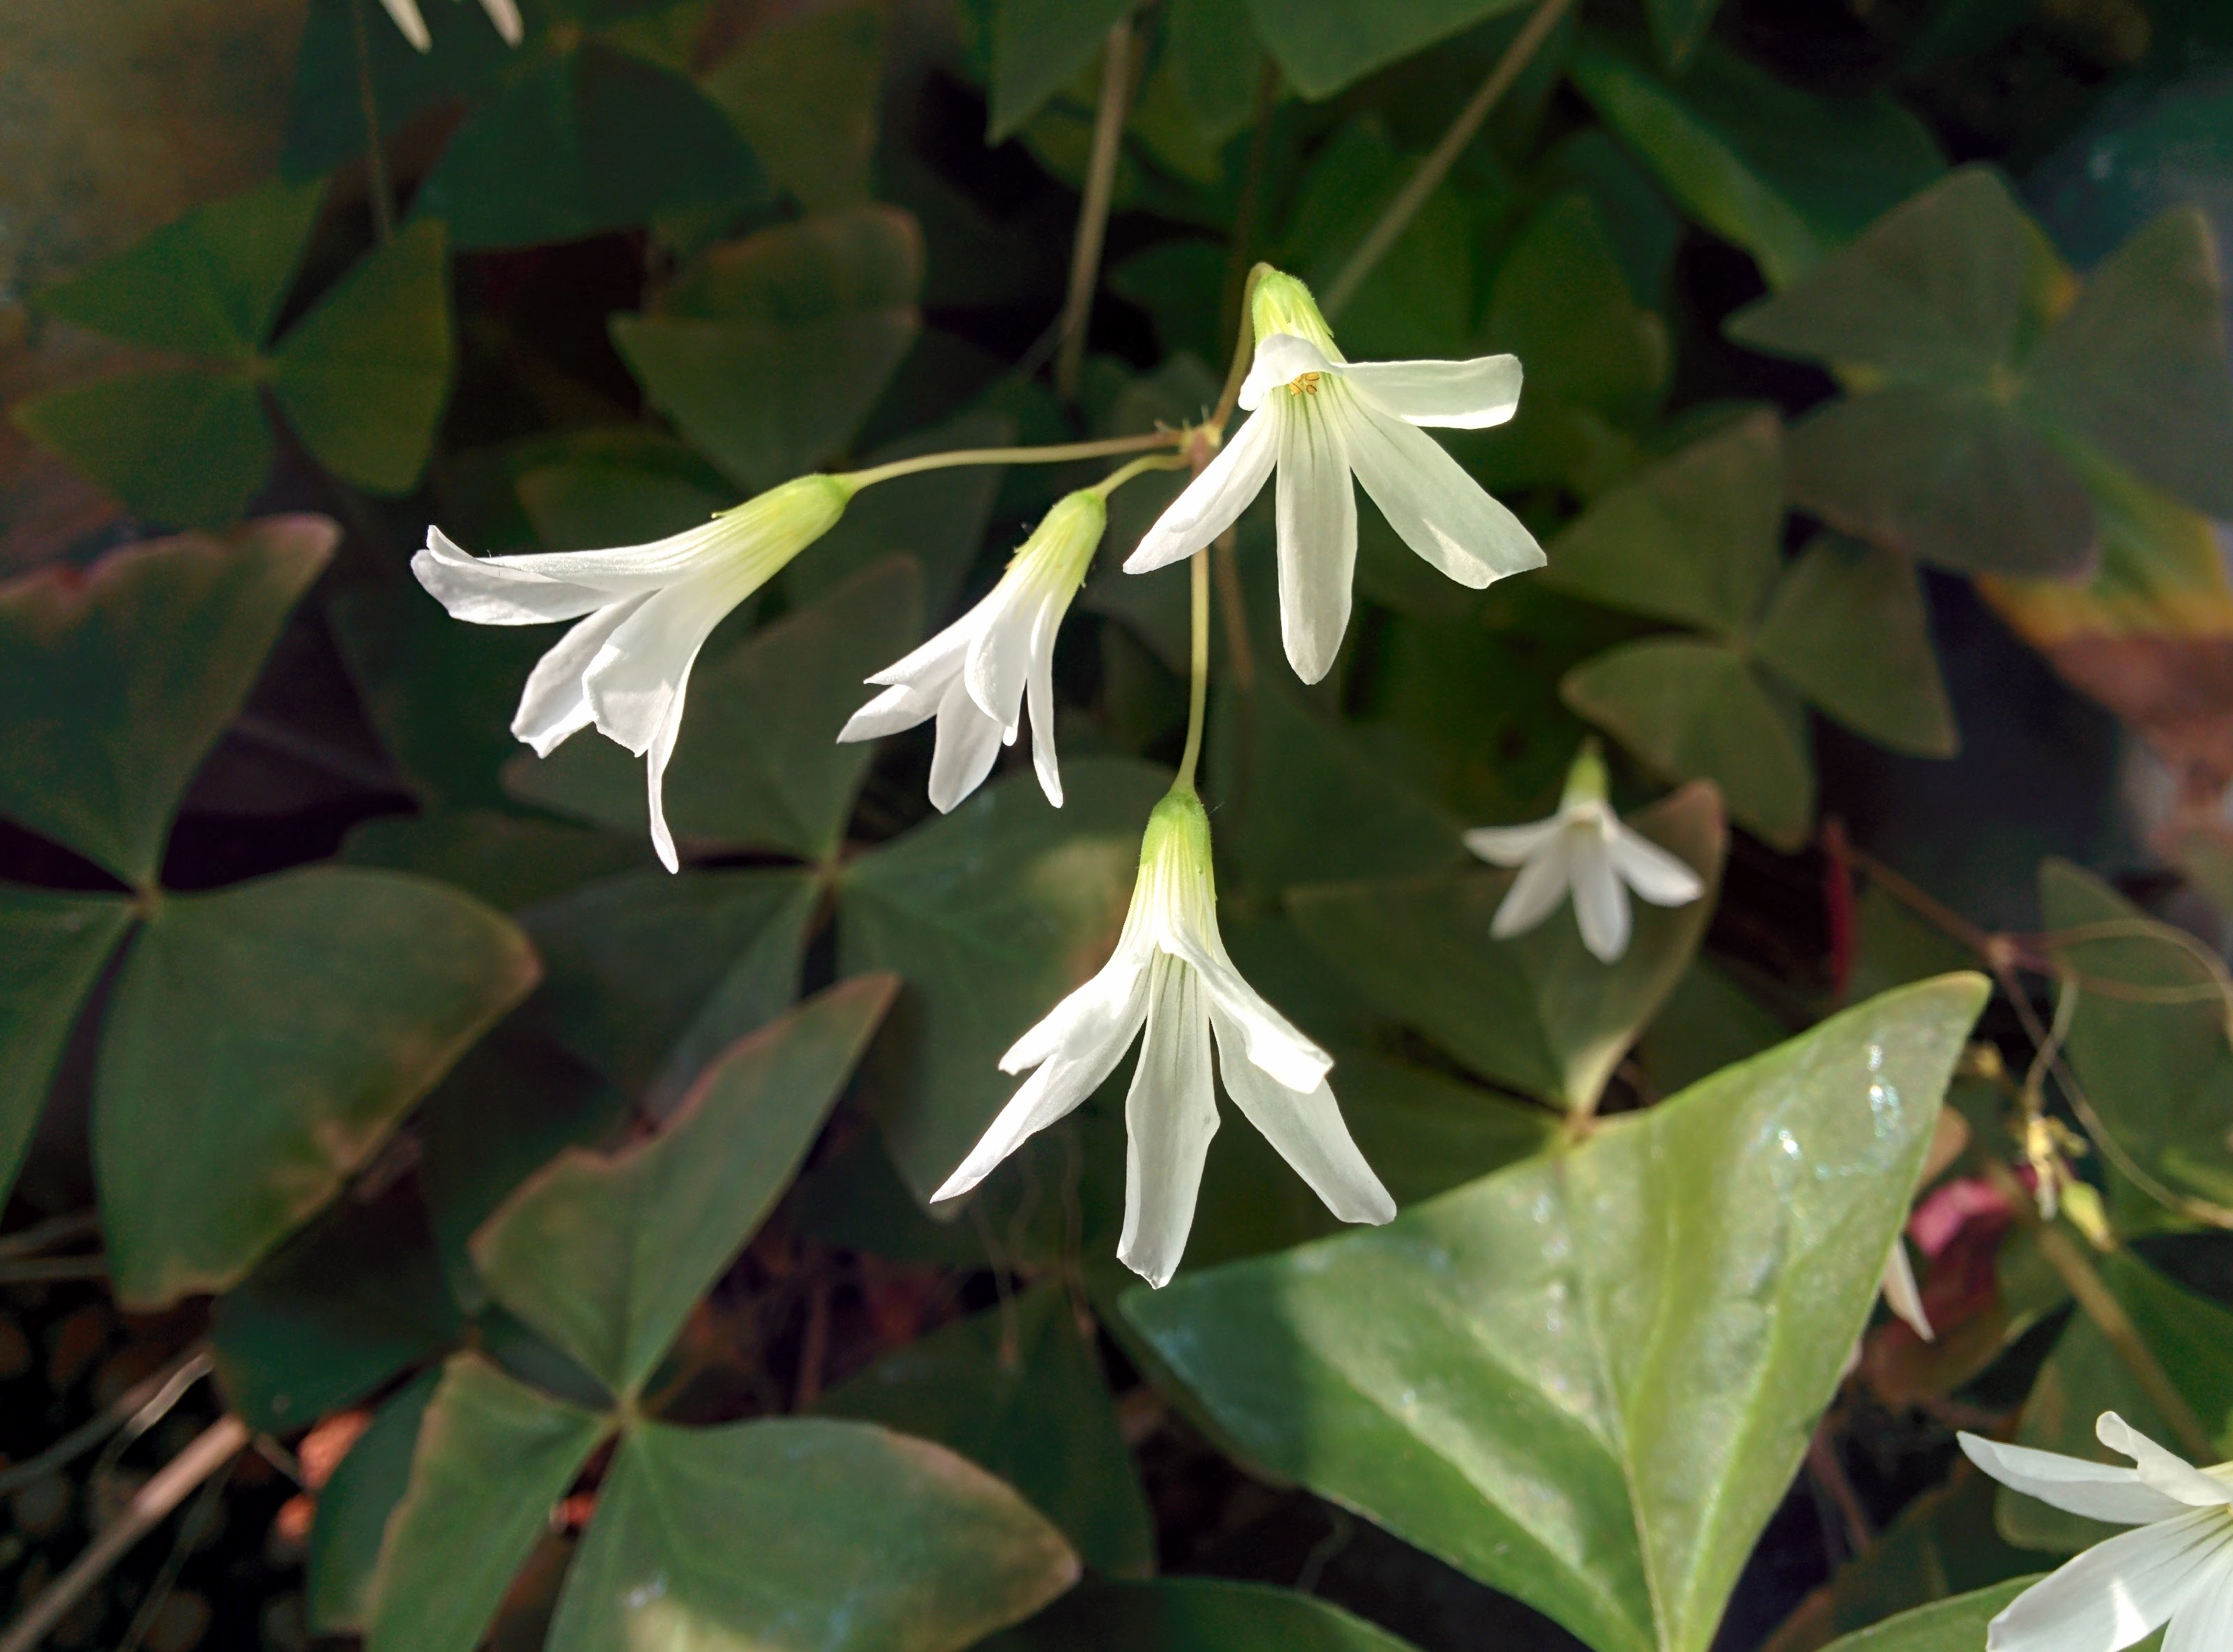 IMG_20151201_122521.jpg 하얀색 꽃이 핀 클로버를 닮은 삼각형 잎의 조경식물...사랑초(Oxalis triangularis subsp. papilionacea)